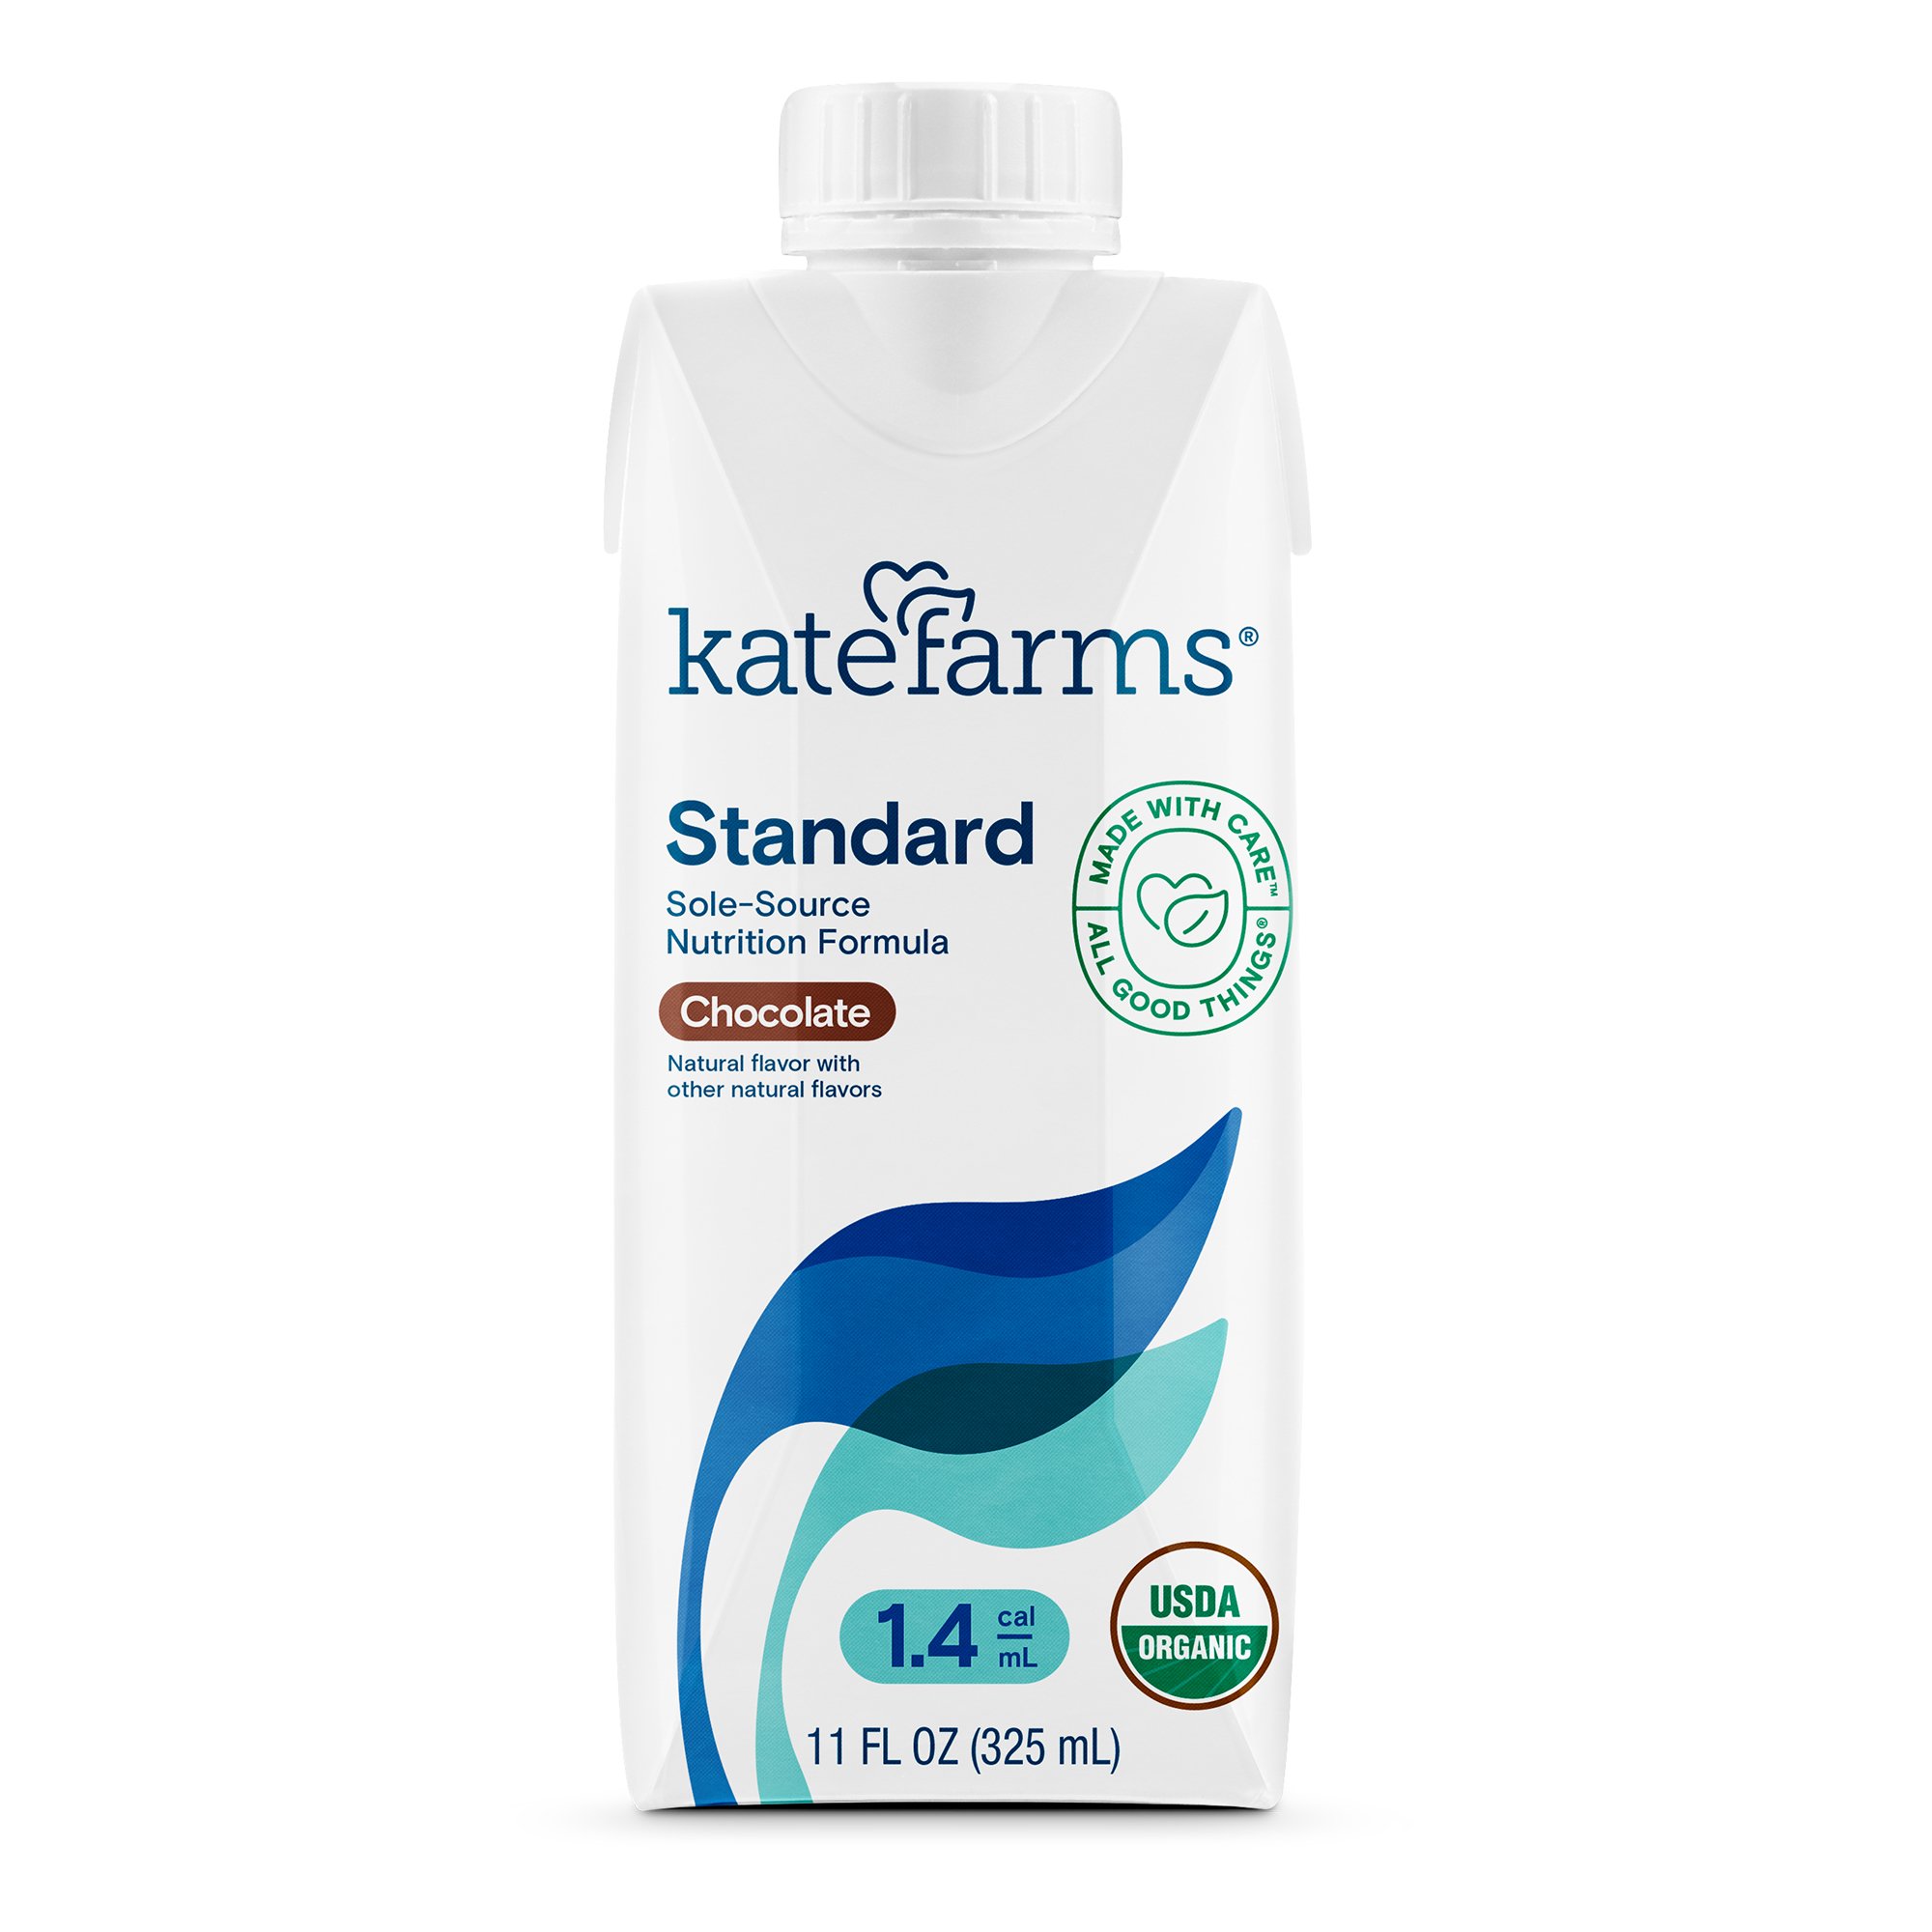 Kate Farms Standard 1.4 Chocolate Sole-Source Nutrition Formula, 11-ounce carton MK 1214421